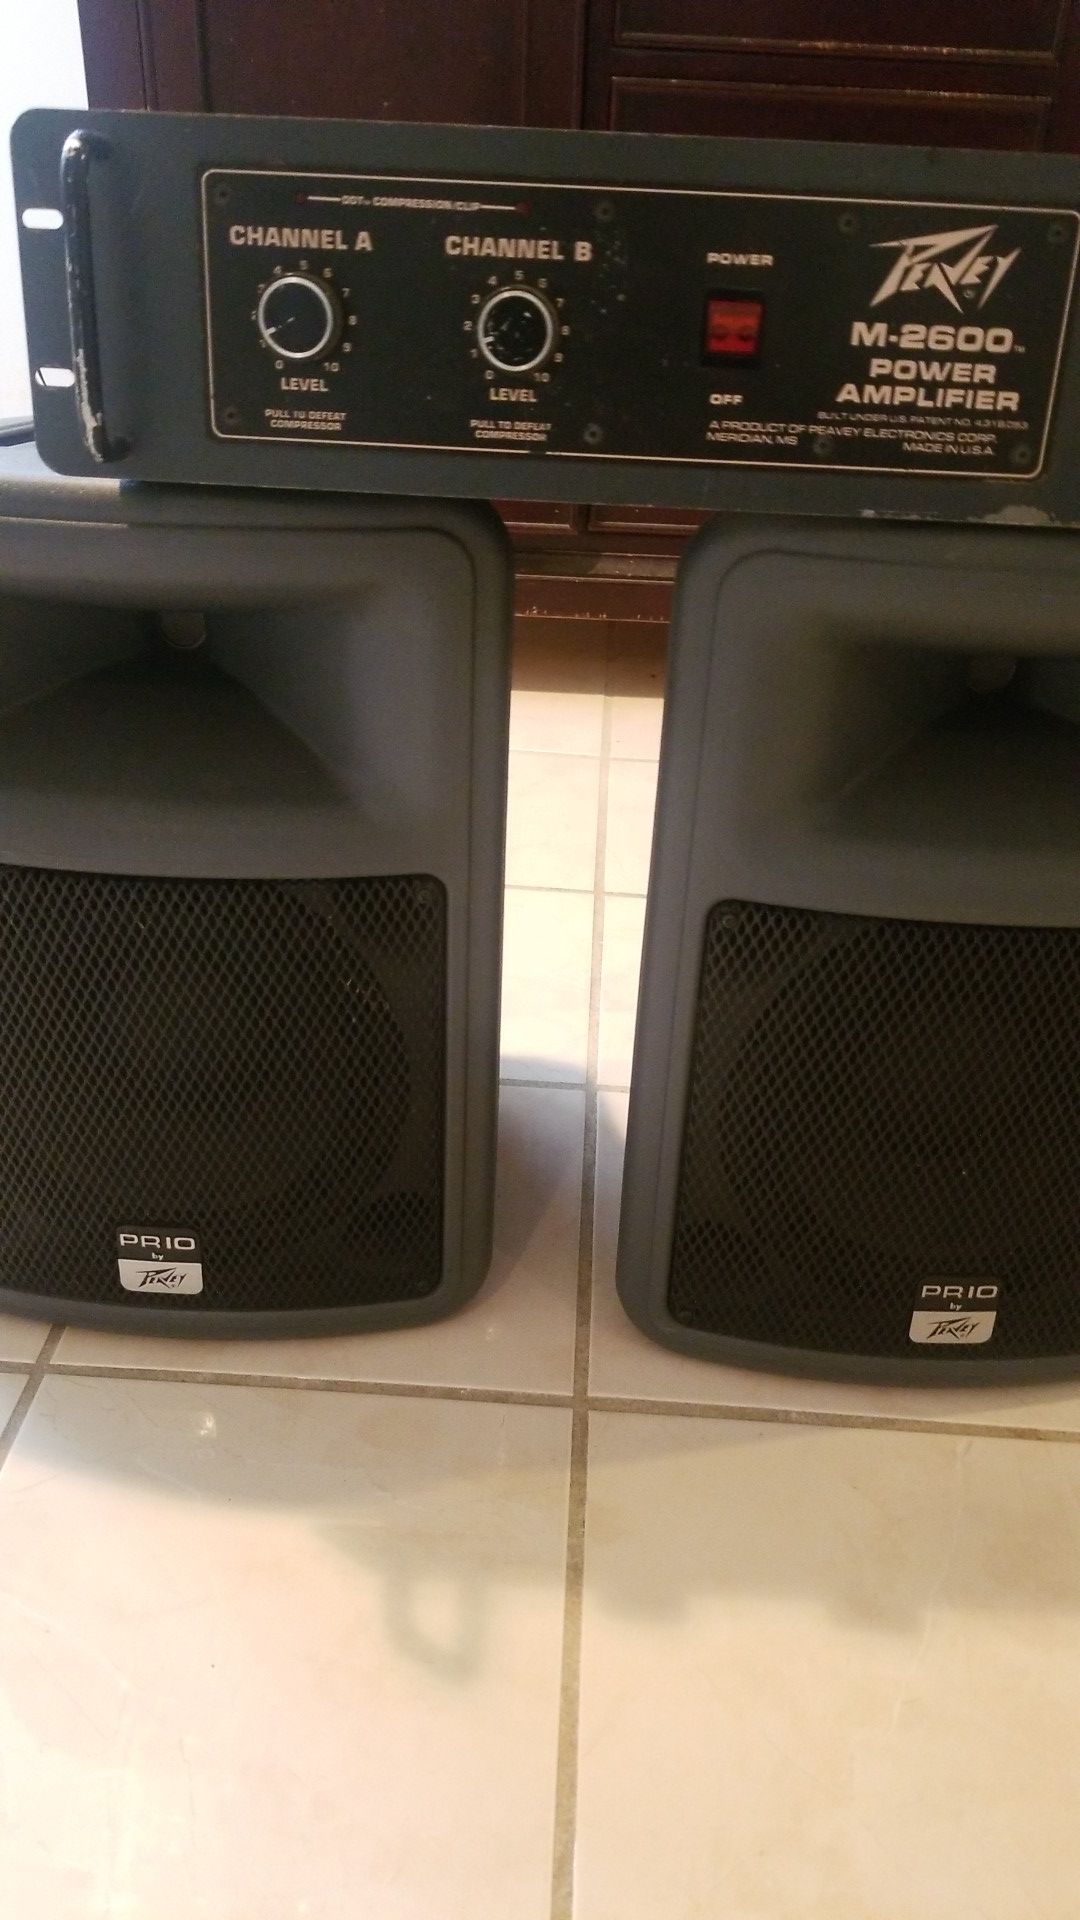 Peavey amplifier and speaker for dj